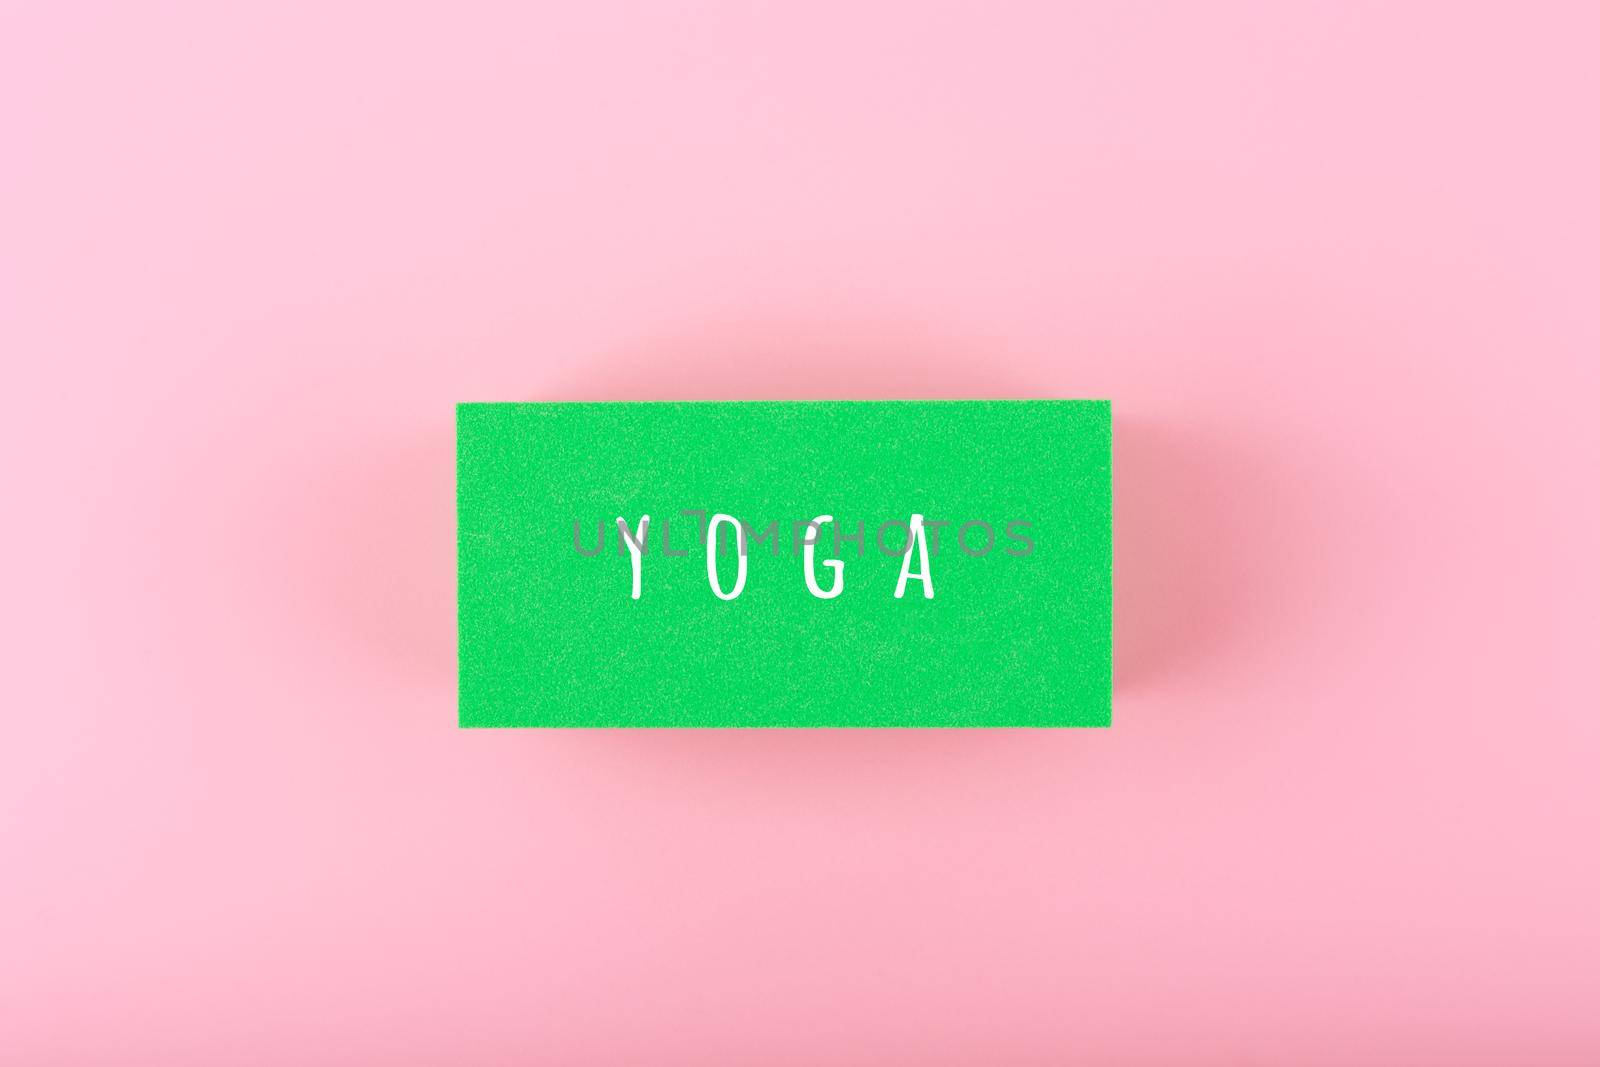 Single word yoga written on green rectangle on bright pink background by Senorina_Irina